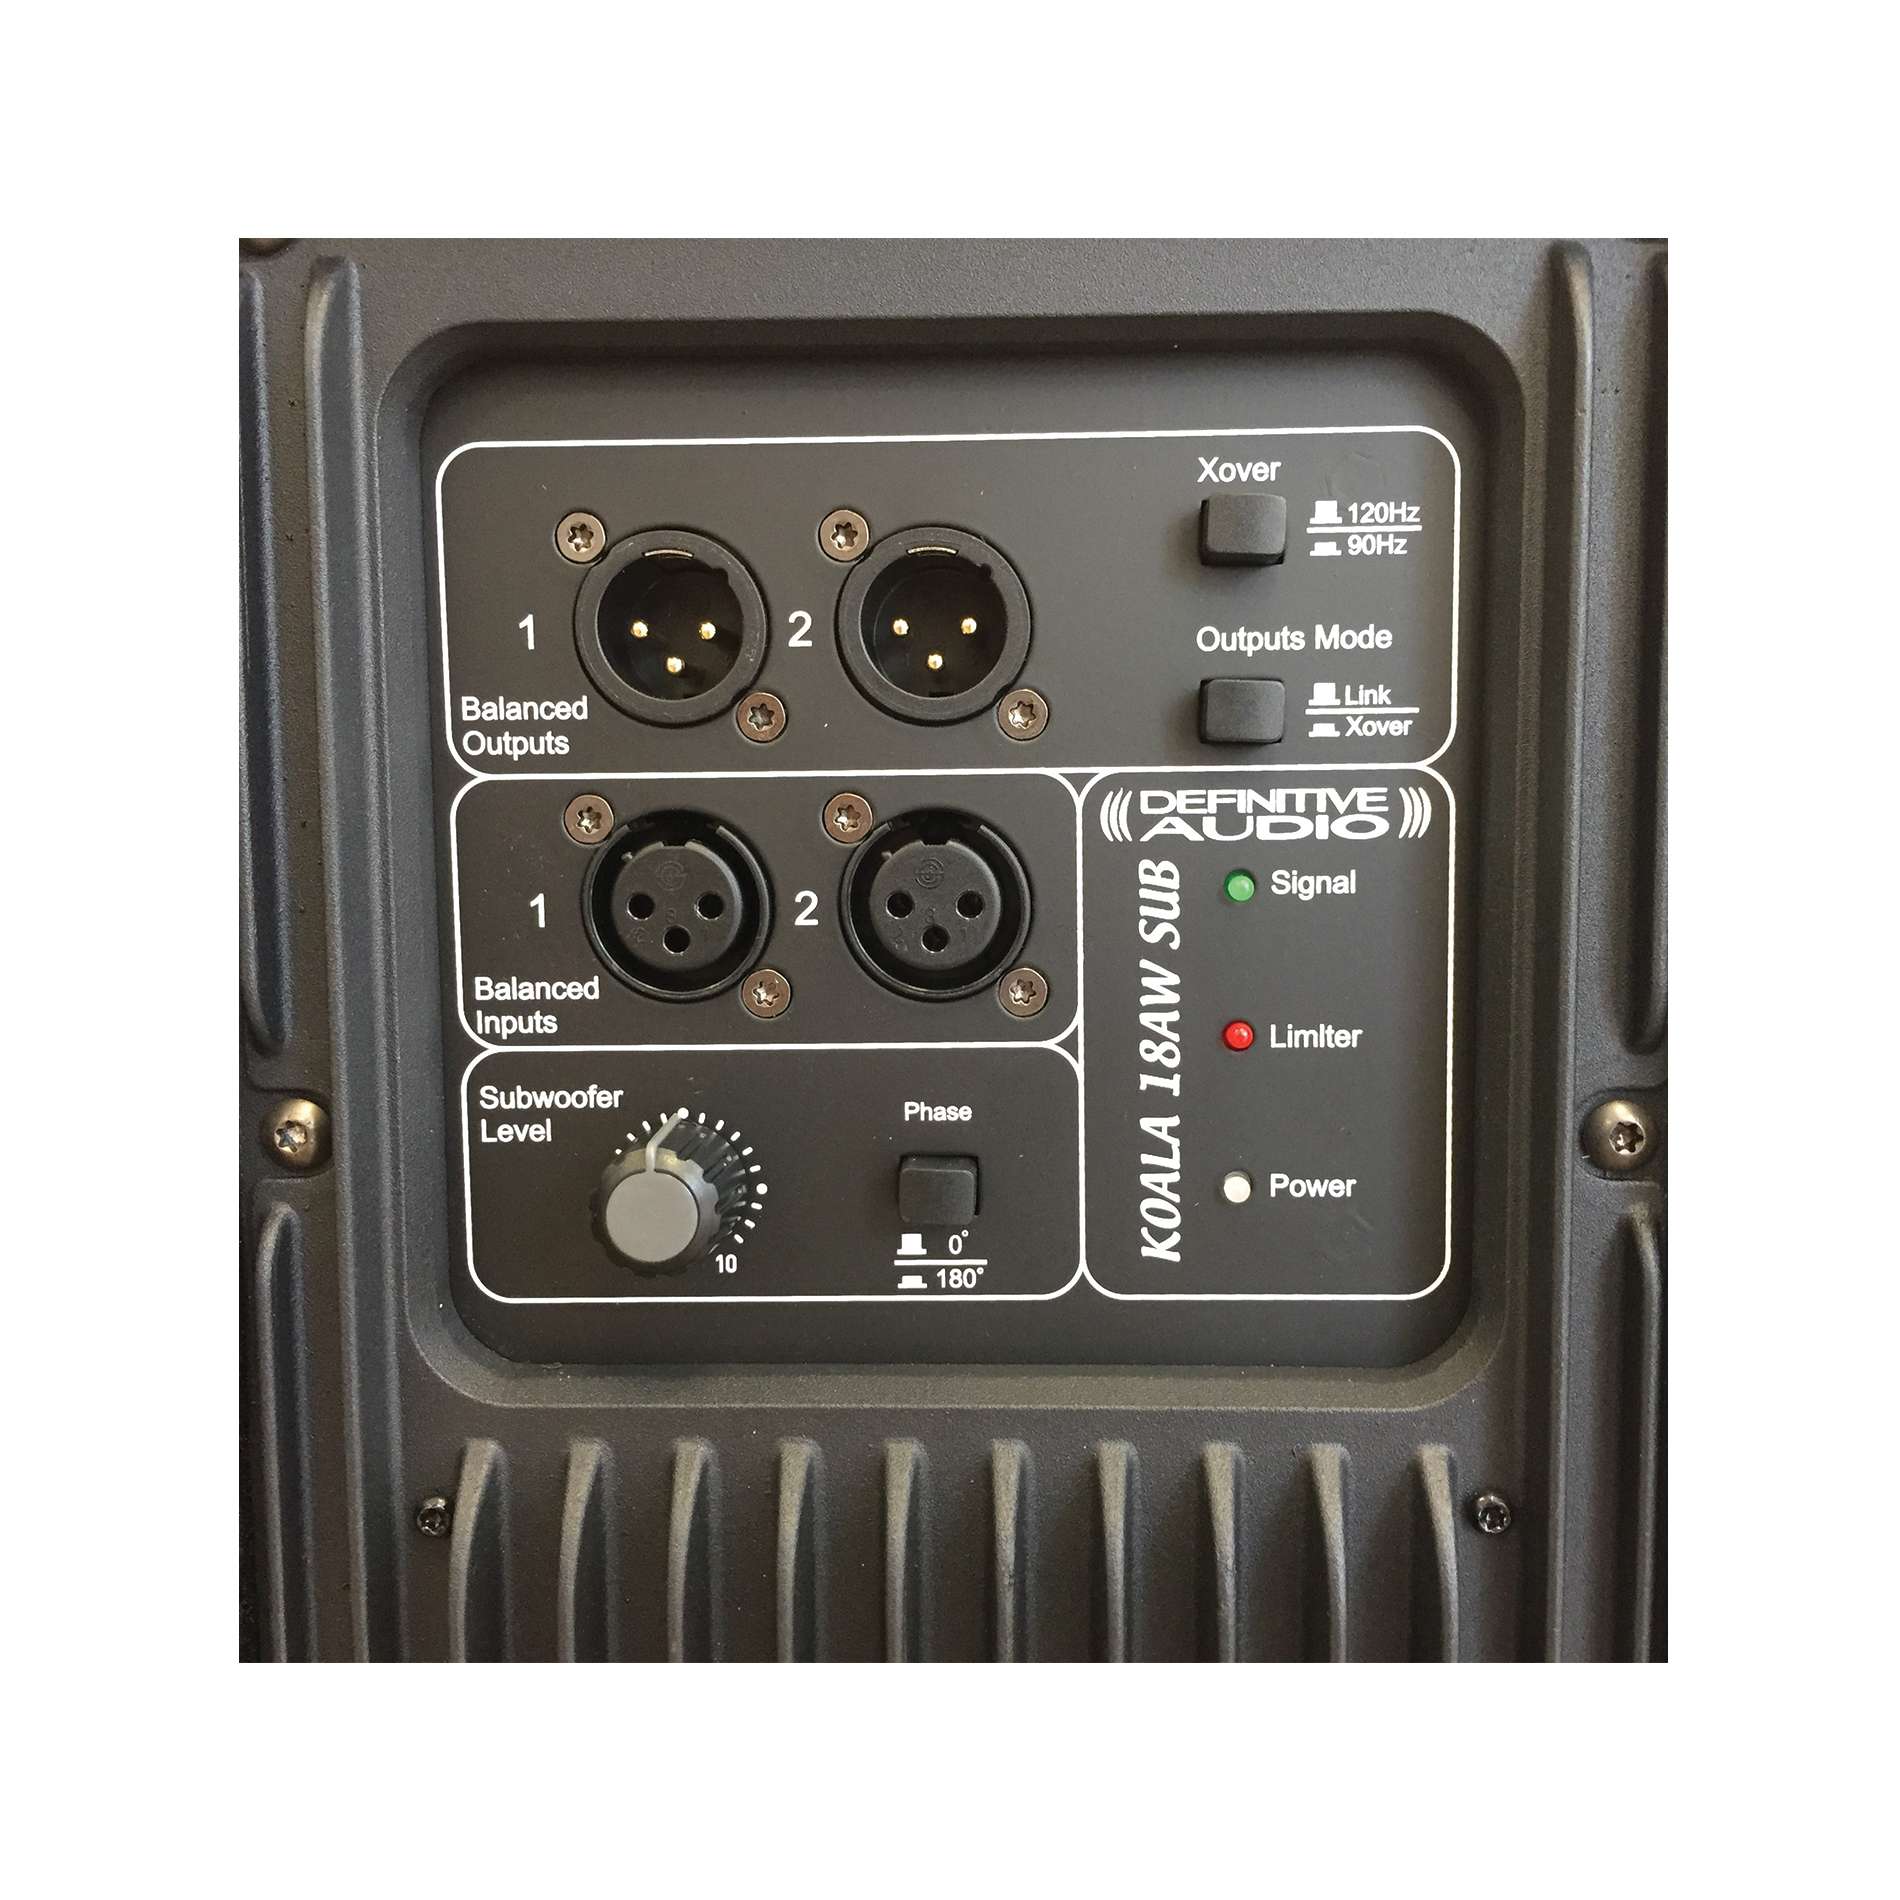 Definitive Audio Koala Neo 3800 Quad - Complete PA system - Variation 4